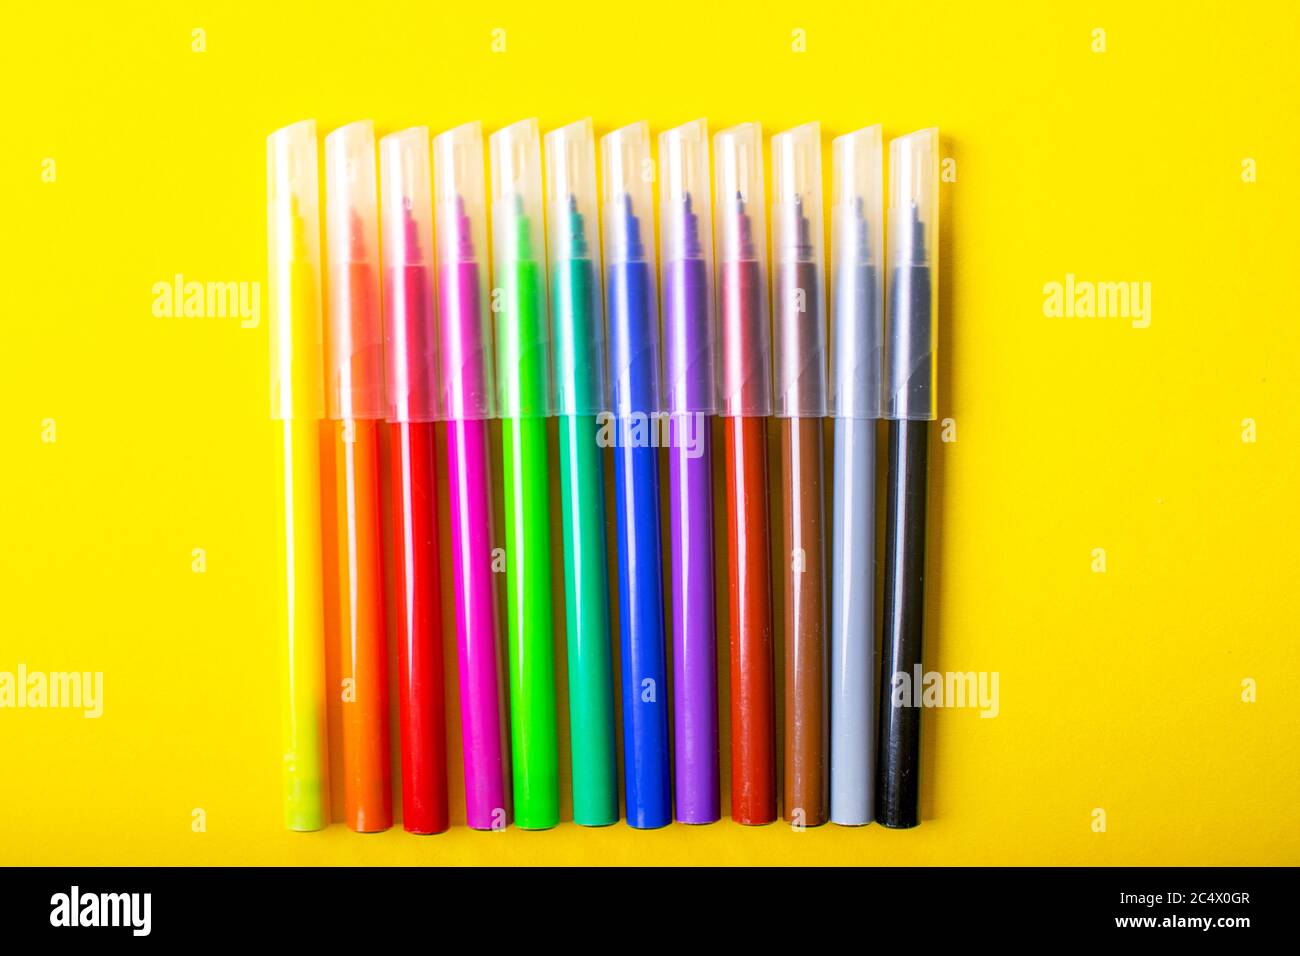 Markers felt tip pen felt tip pens hi-res stock photography and images -  Alamy